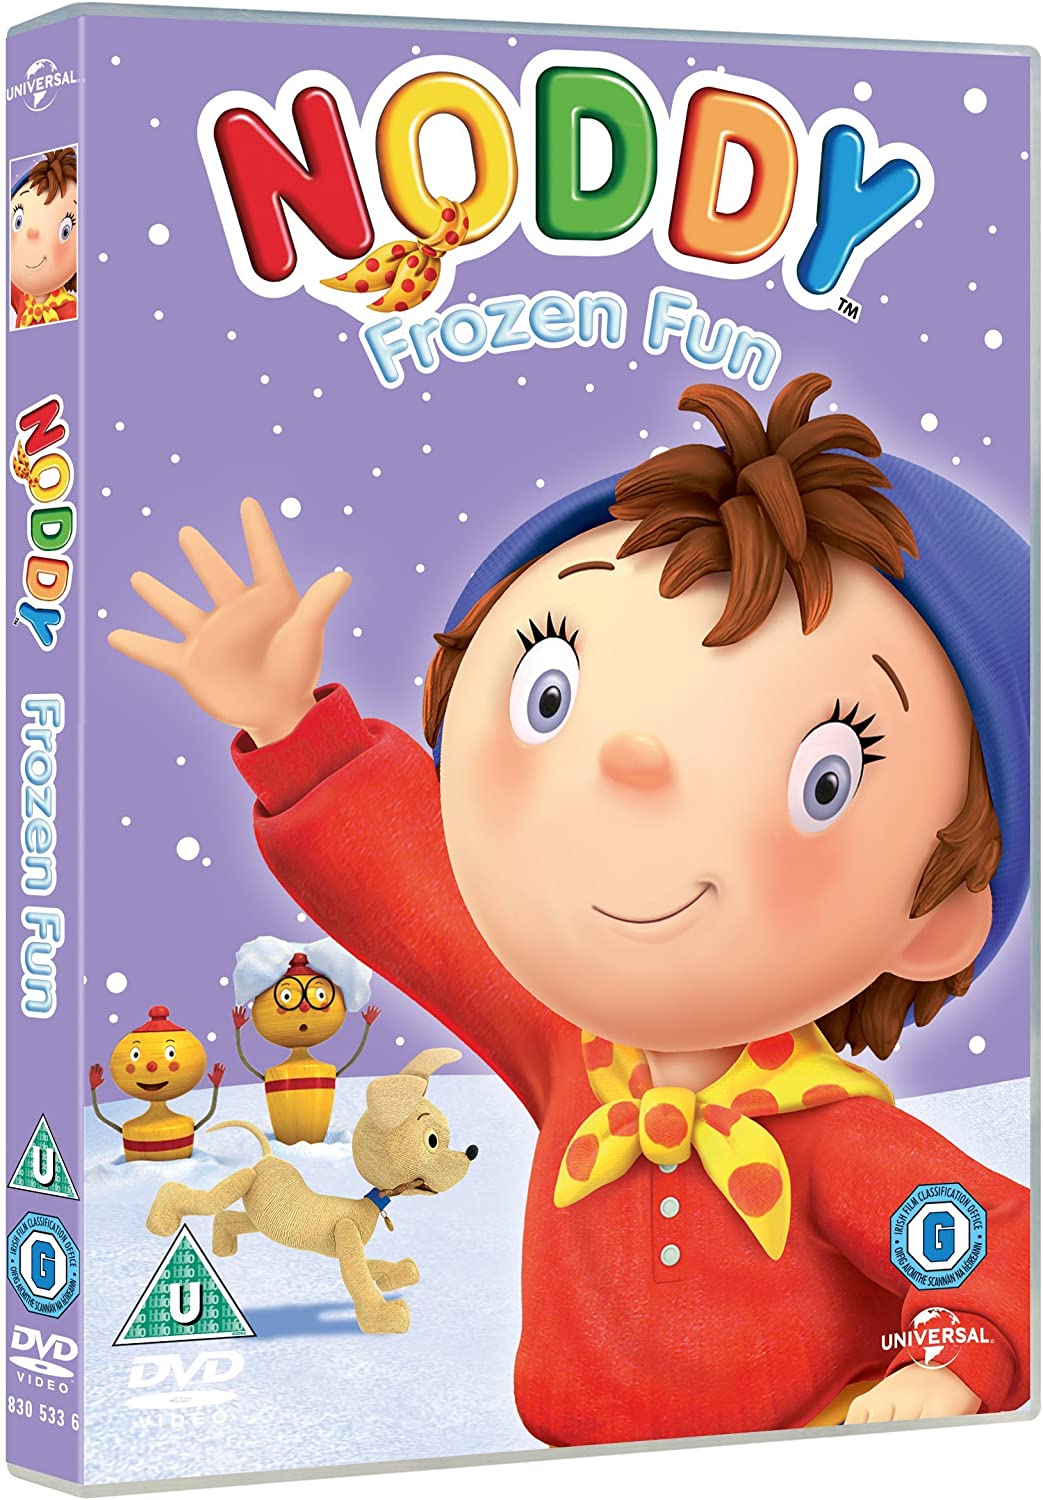 Noddy in Toyland: Frozen Fun [DVD]